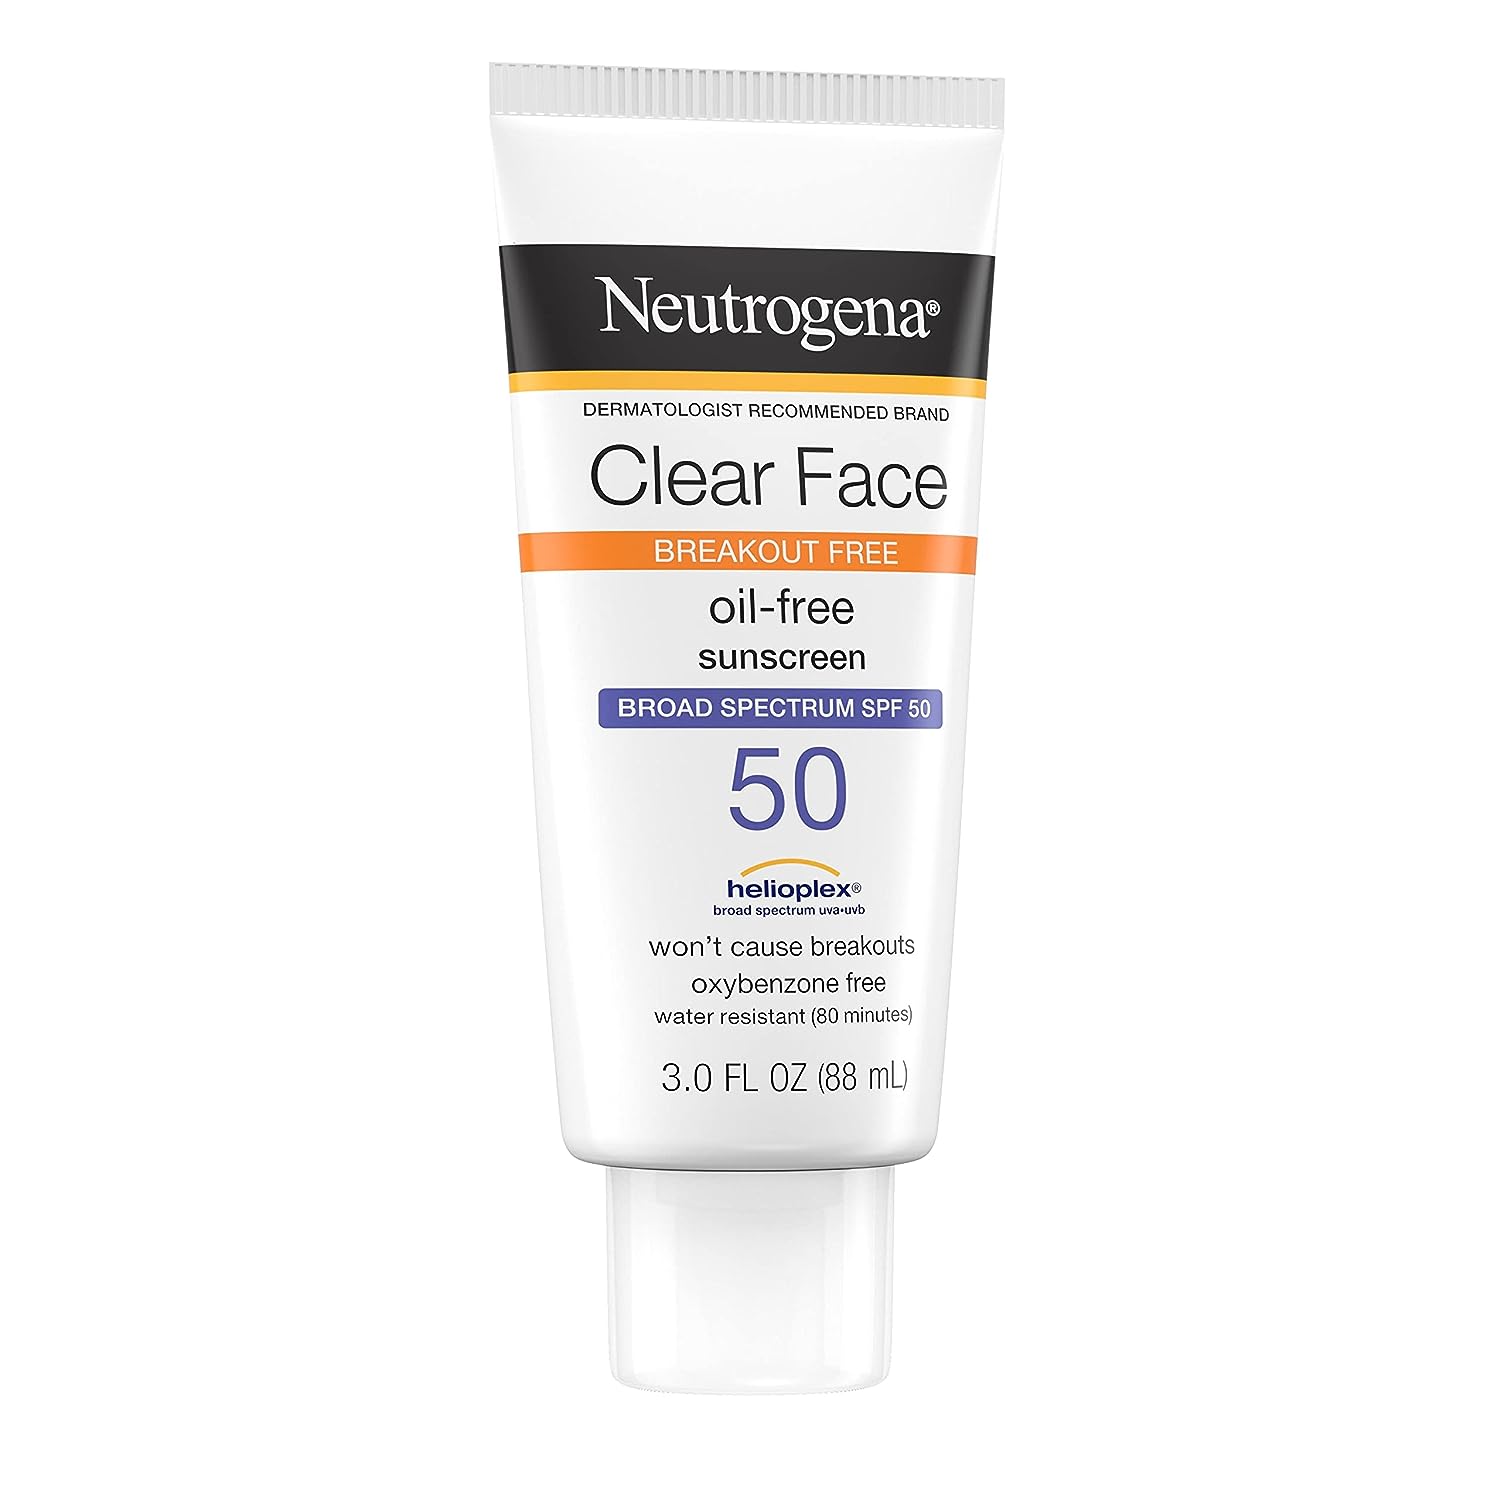 Neutrogena Clear Face Liquid Lotion Sunscreen for Acne-Prone Skin, Broad Spectrum SPF 50 UVA/UVB Protection, Oil-, Fragrance- & Oxybenzone-Free Facial Sunscreen, Non-Comedogenic, 3 fl. oz : Beauty & Personal Care